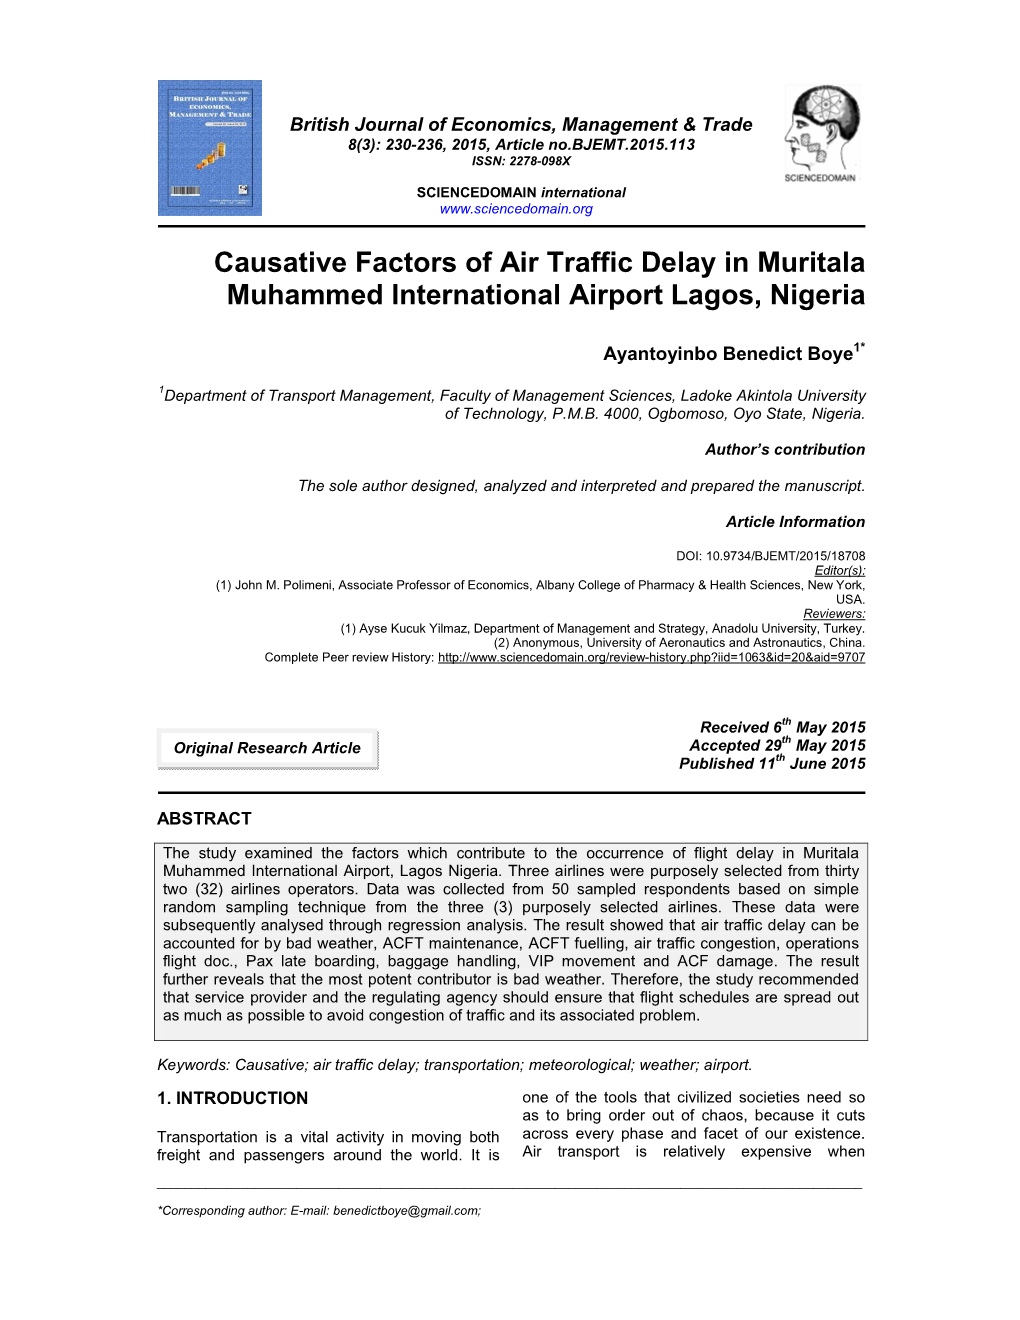 Causative Factors of Air Traffic Delay in Muritala Muhammed International Airport Lagos, Nigeria